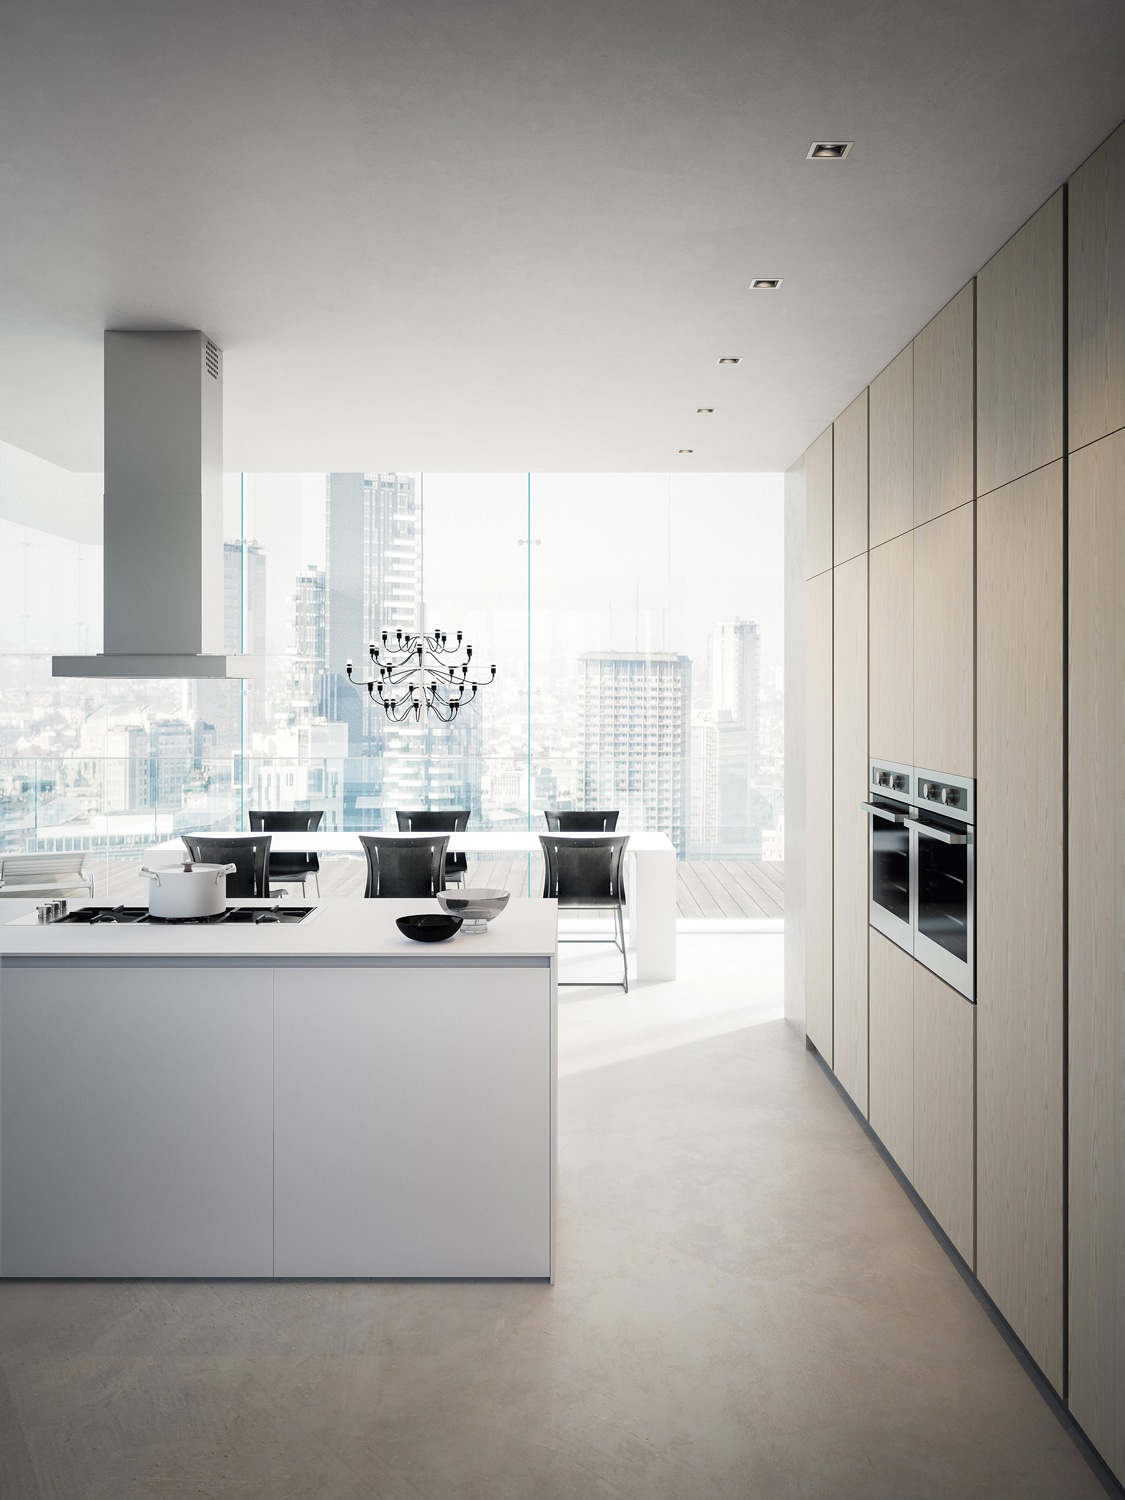 Omicron luxury kitchen design